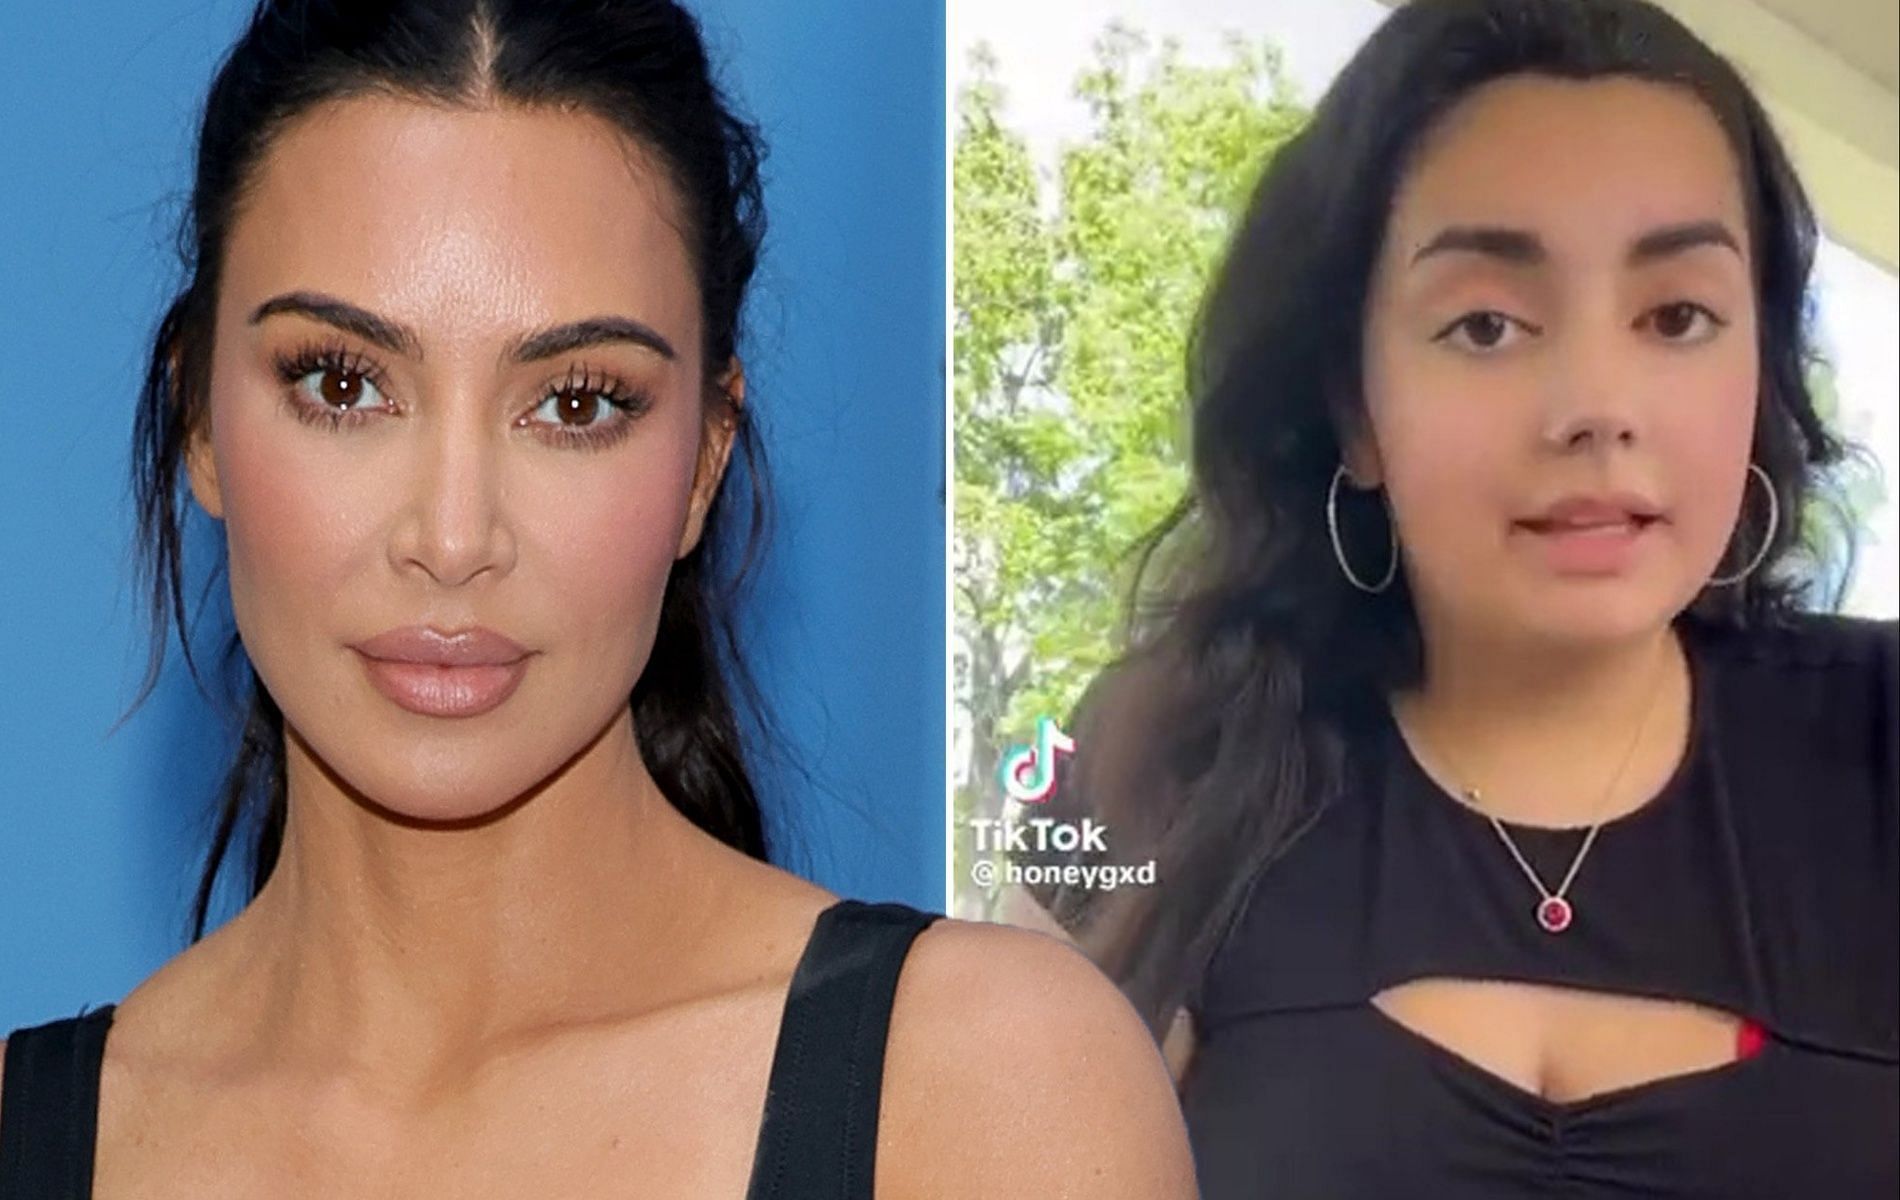 TikTok user says Kim Kardashian's SKIMS saved her life after